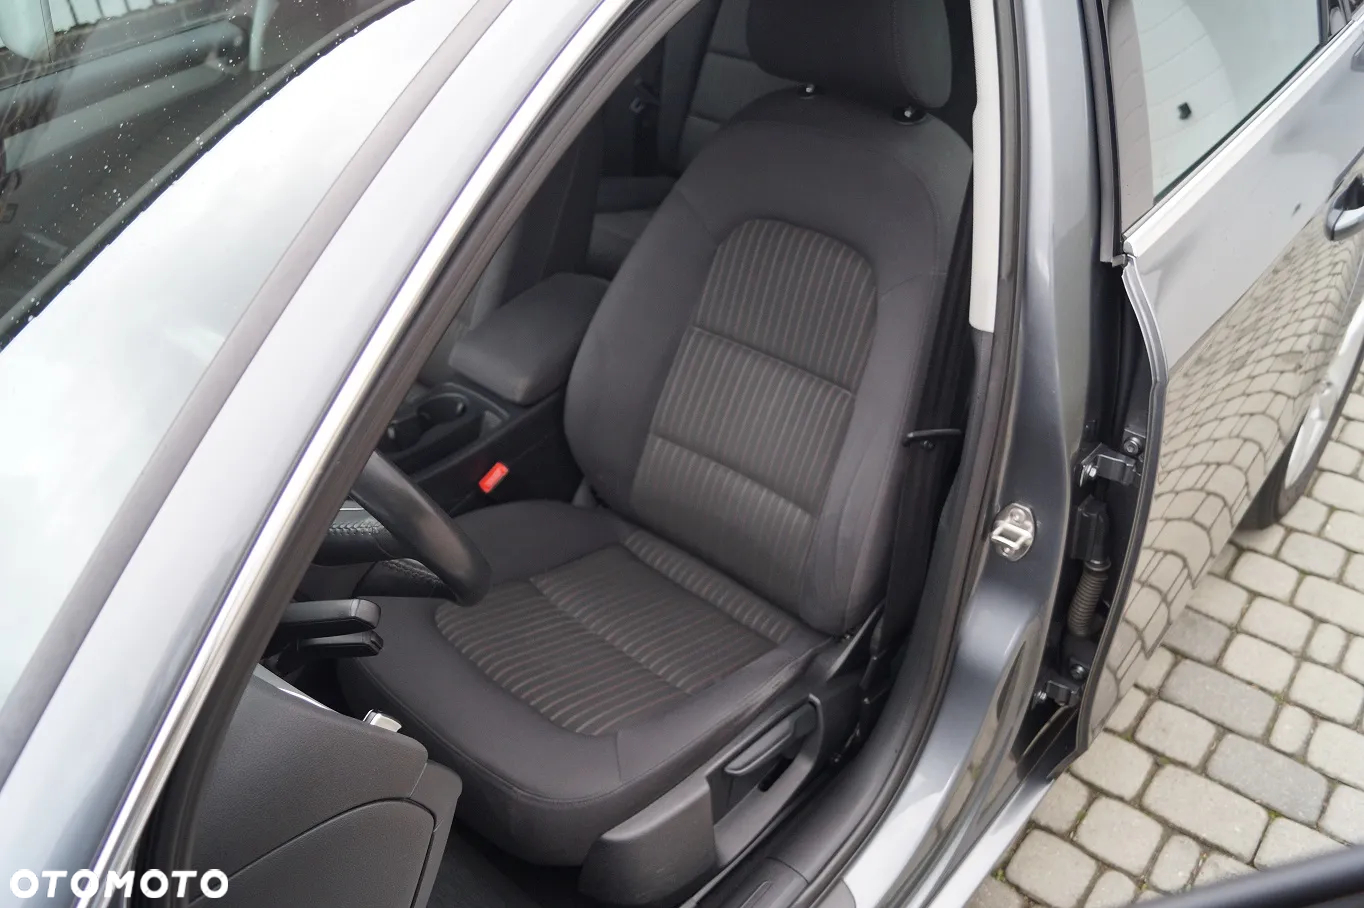 Audi A4 Avant 1.8 TFSI Ambiente - 21